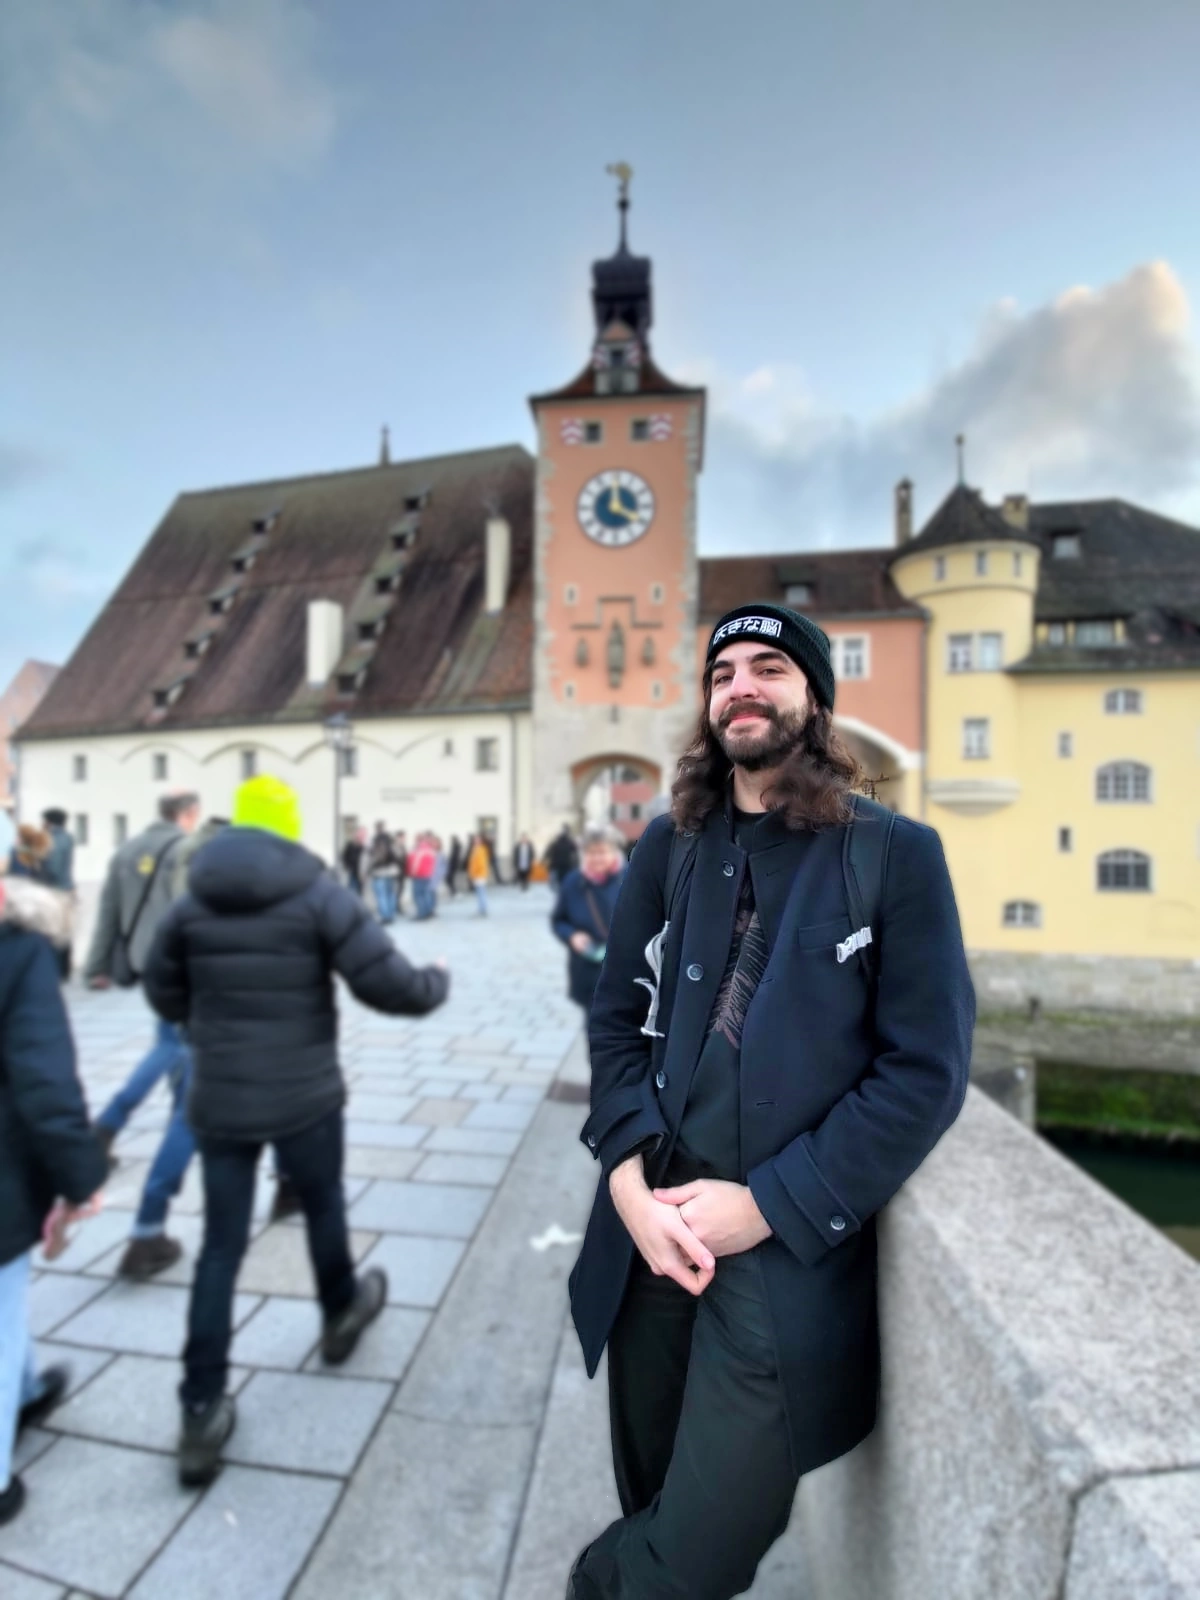 Profile picture of me in Regensburg